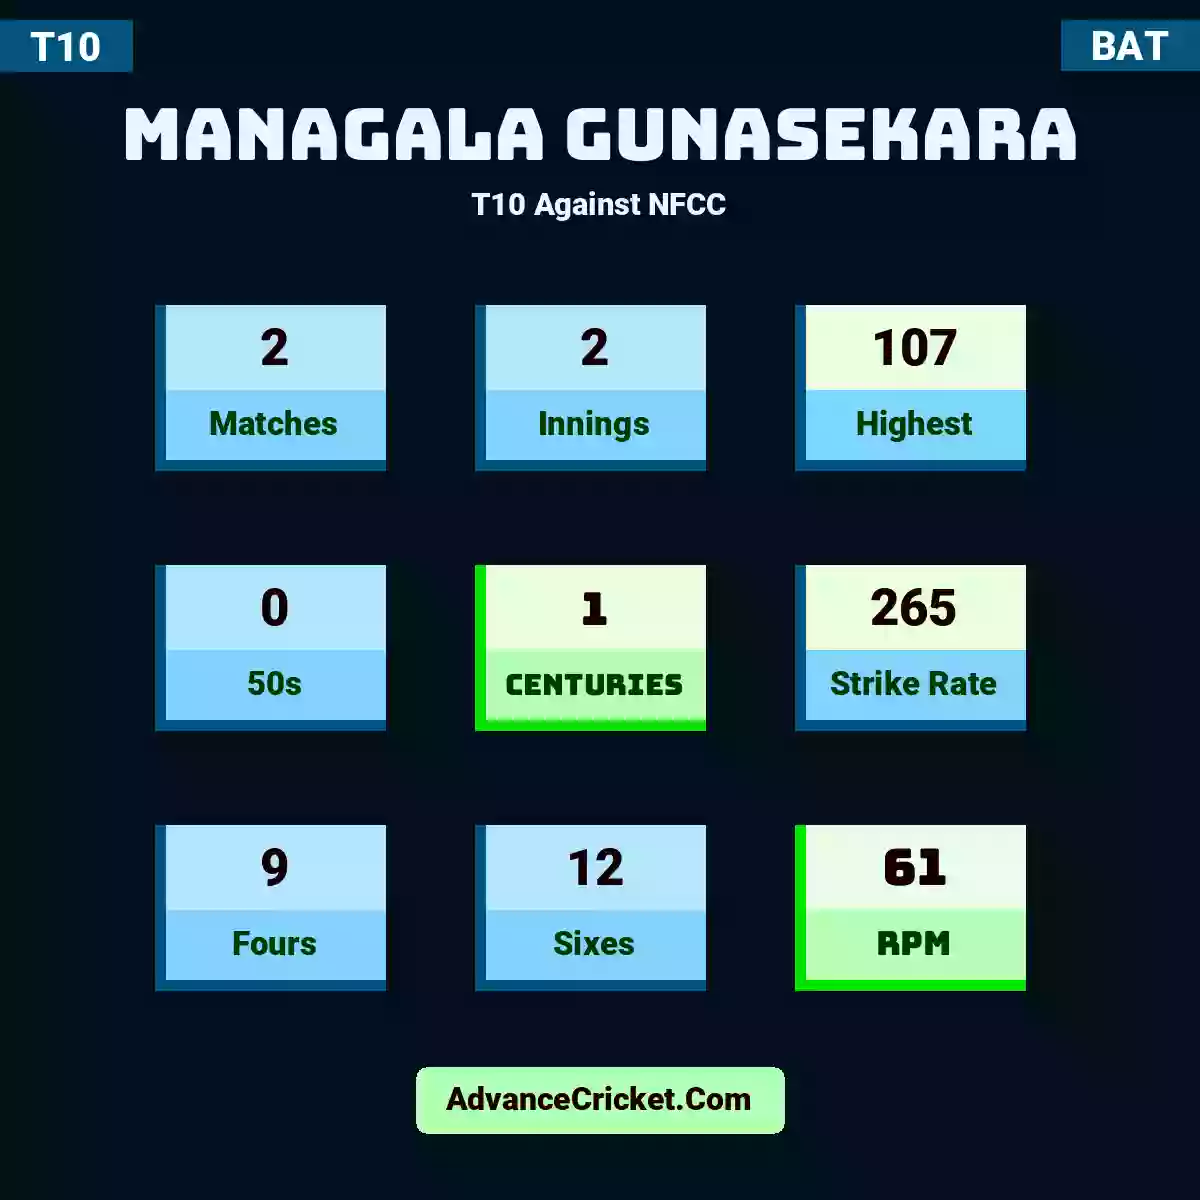 Managala Gunasekara T10  Against NFCC, Managala Gunasekara played 2 matches, scored 107 runs as highest, 0 half-centuries, and 1 centuries, with a strike rate of 265. M.Gunasekara hit 9 fours and 12 sixes, with an RPM of 61.